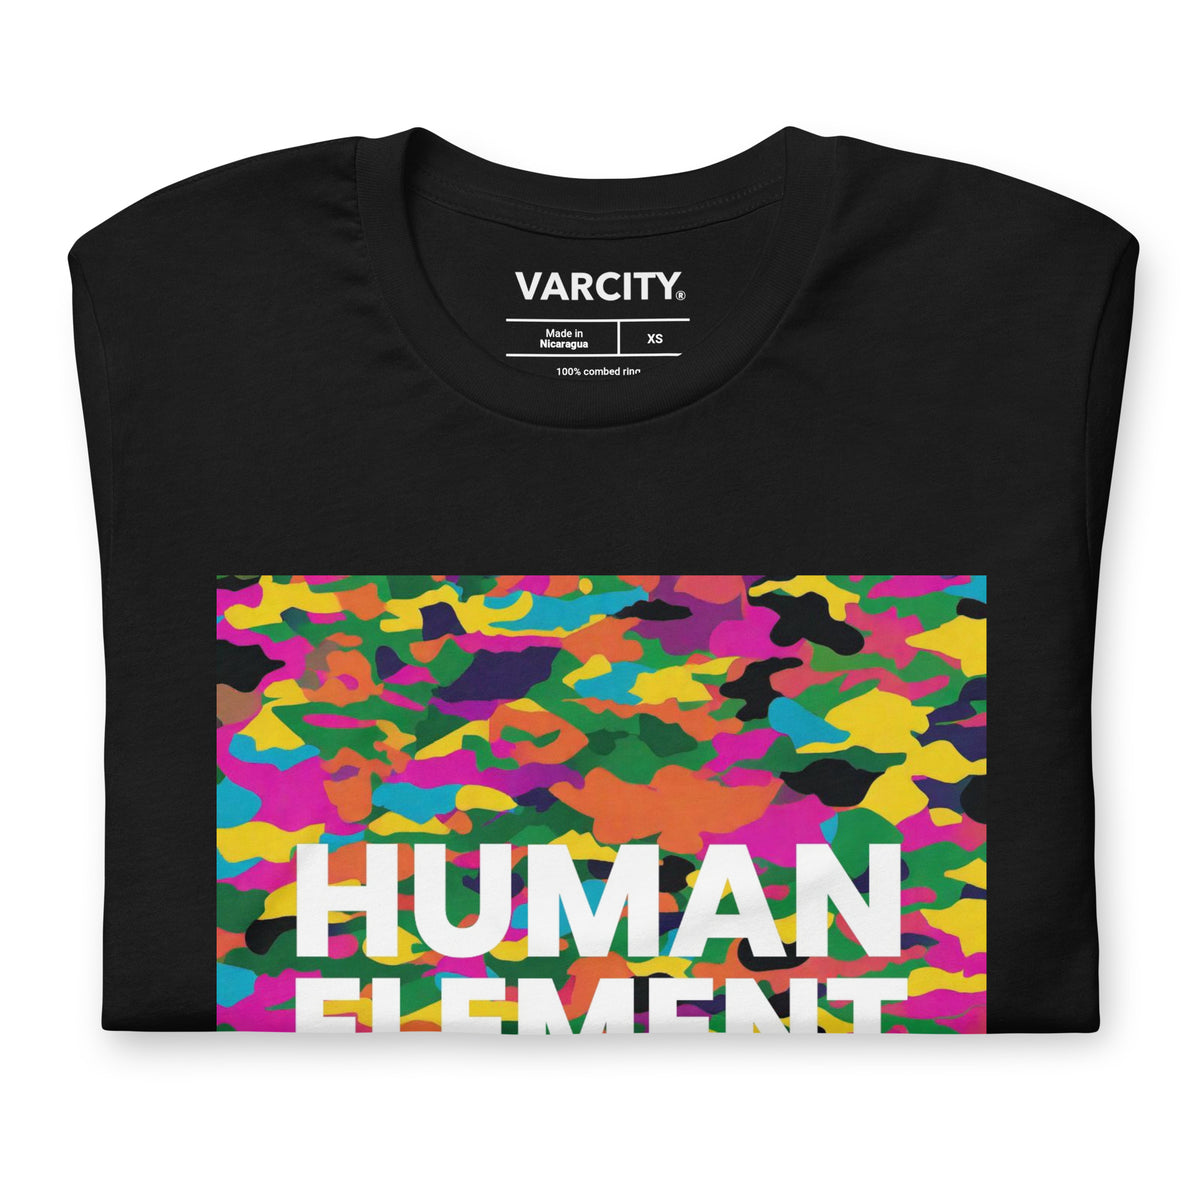 Human Element Camouflage Vibes Unisex T-Shirt